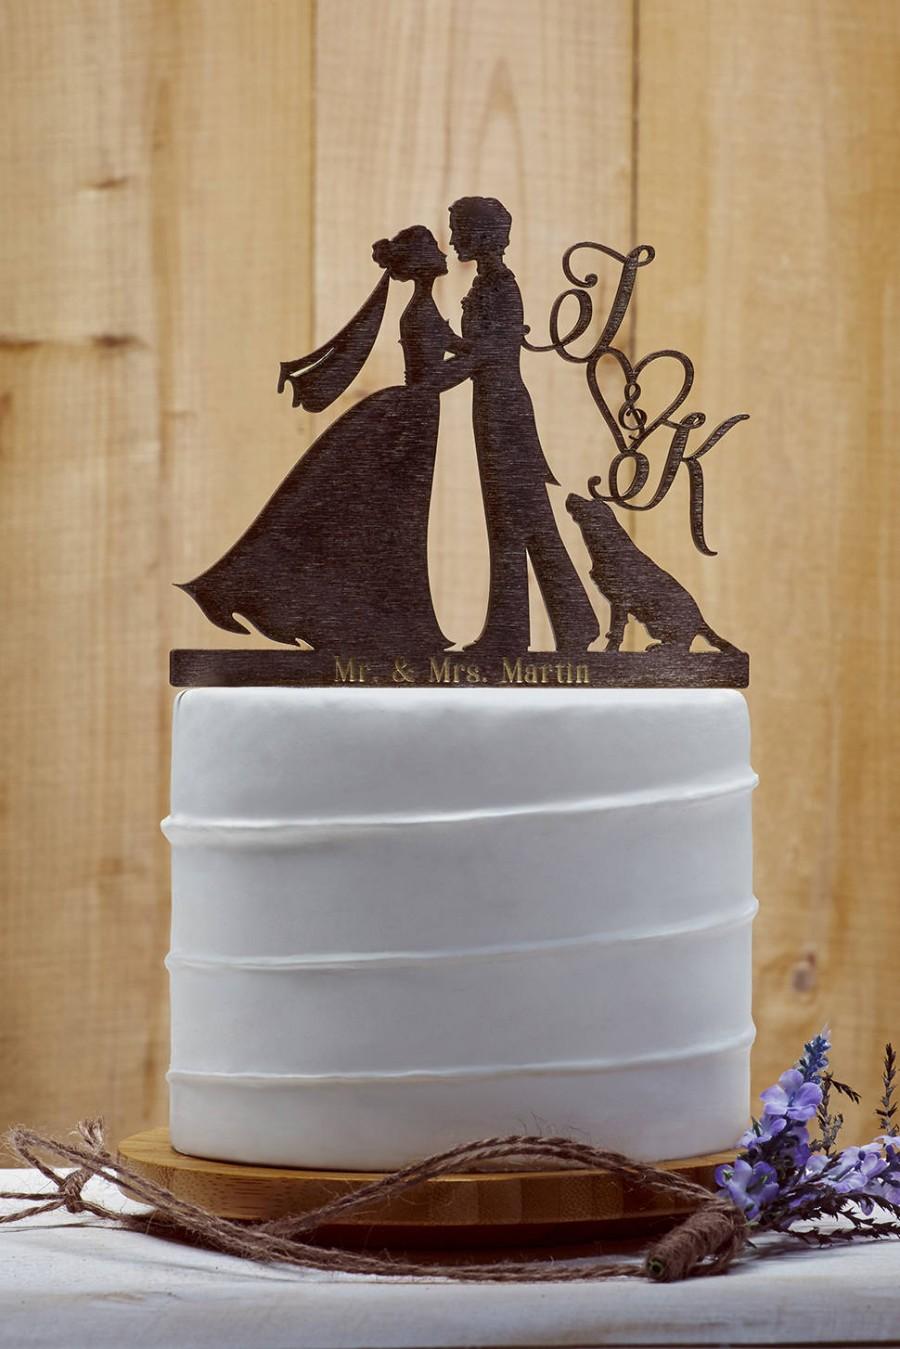 Wedding - Customized Wedding Cake Topper With Dog, Personalized Cake Topper for Wedding, Custom Personalized Wedding Cake Topper, Couple Cake Topper16